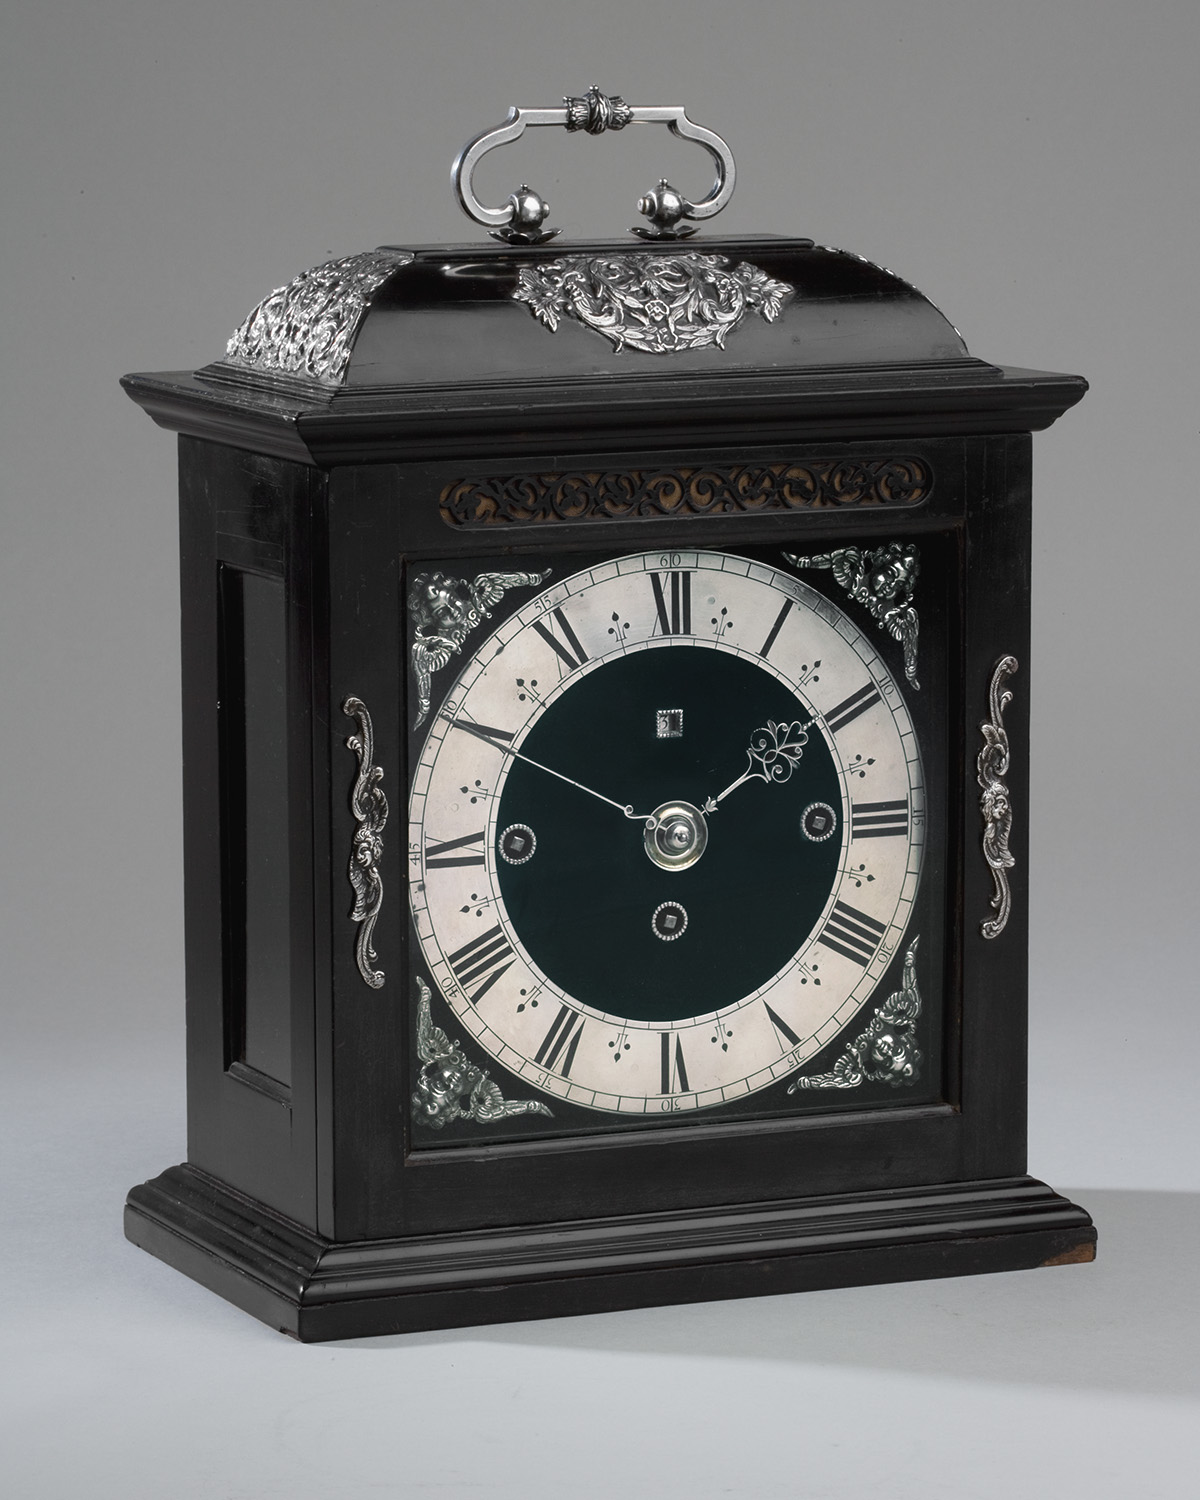 Carter Marsh & Co. Ltd (Antique Clocks) – Product categories – Table Clocks